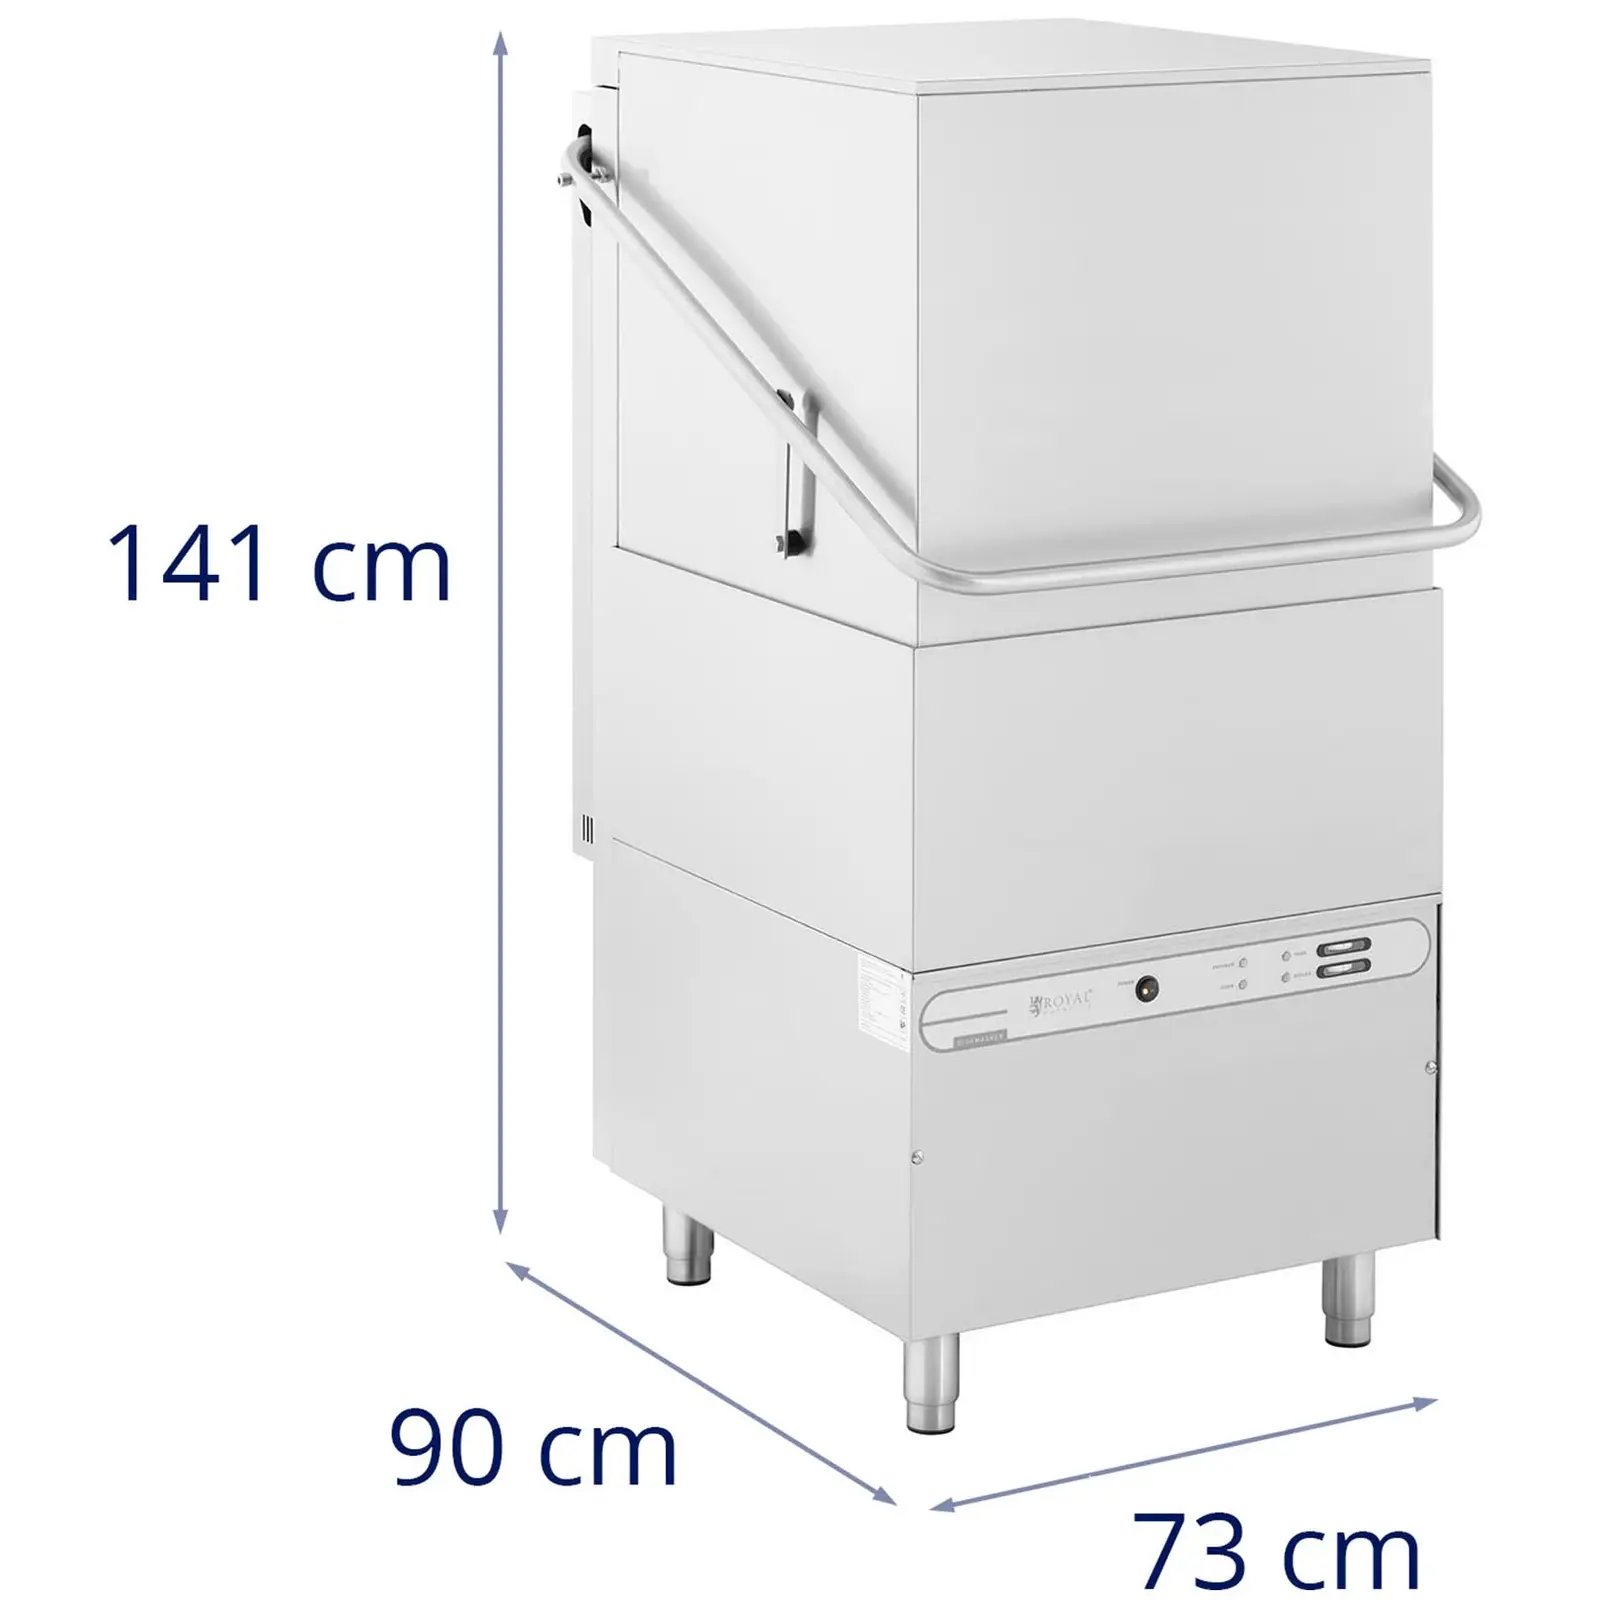 Hætteopvaskemaskine - 8600 W - Royal Catering - maks. 60 opvaskekurve i timen